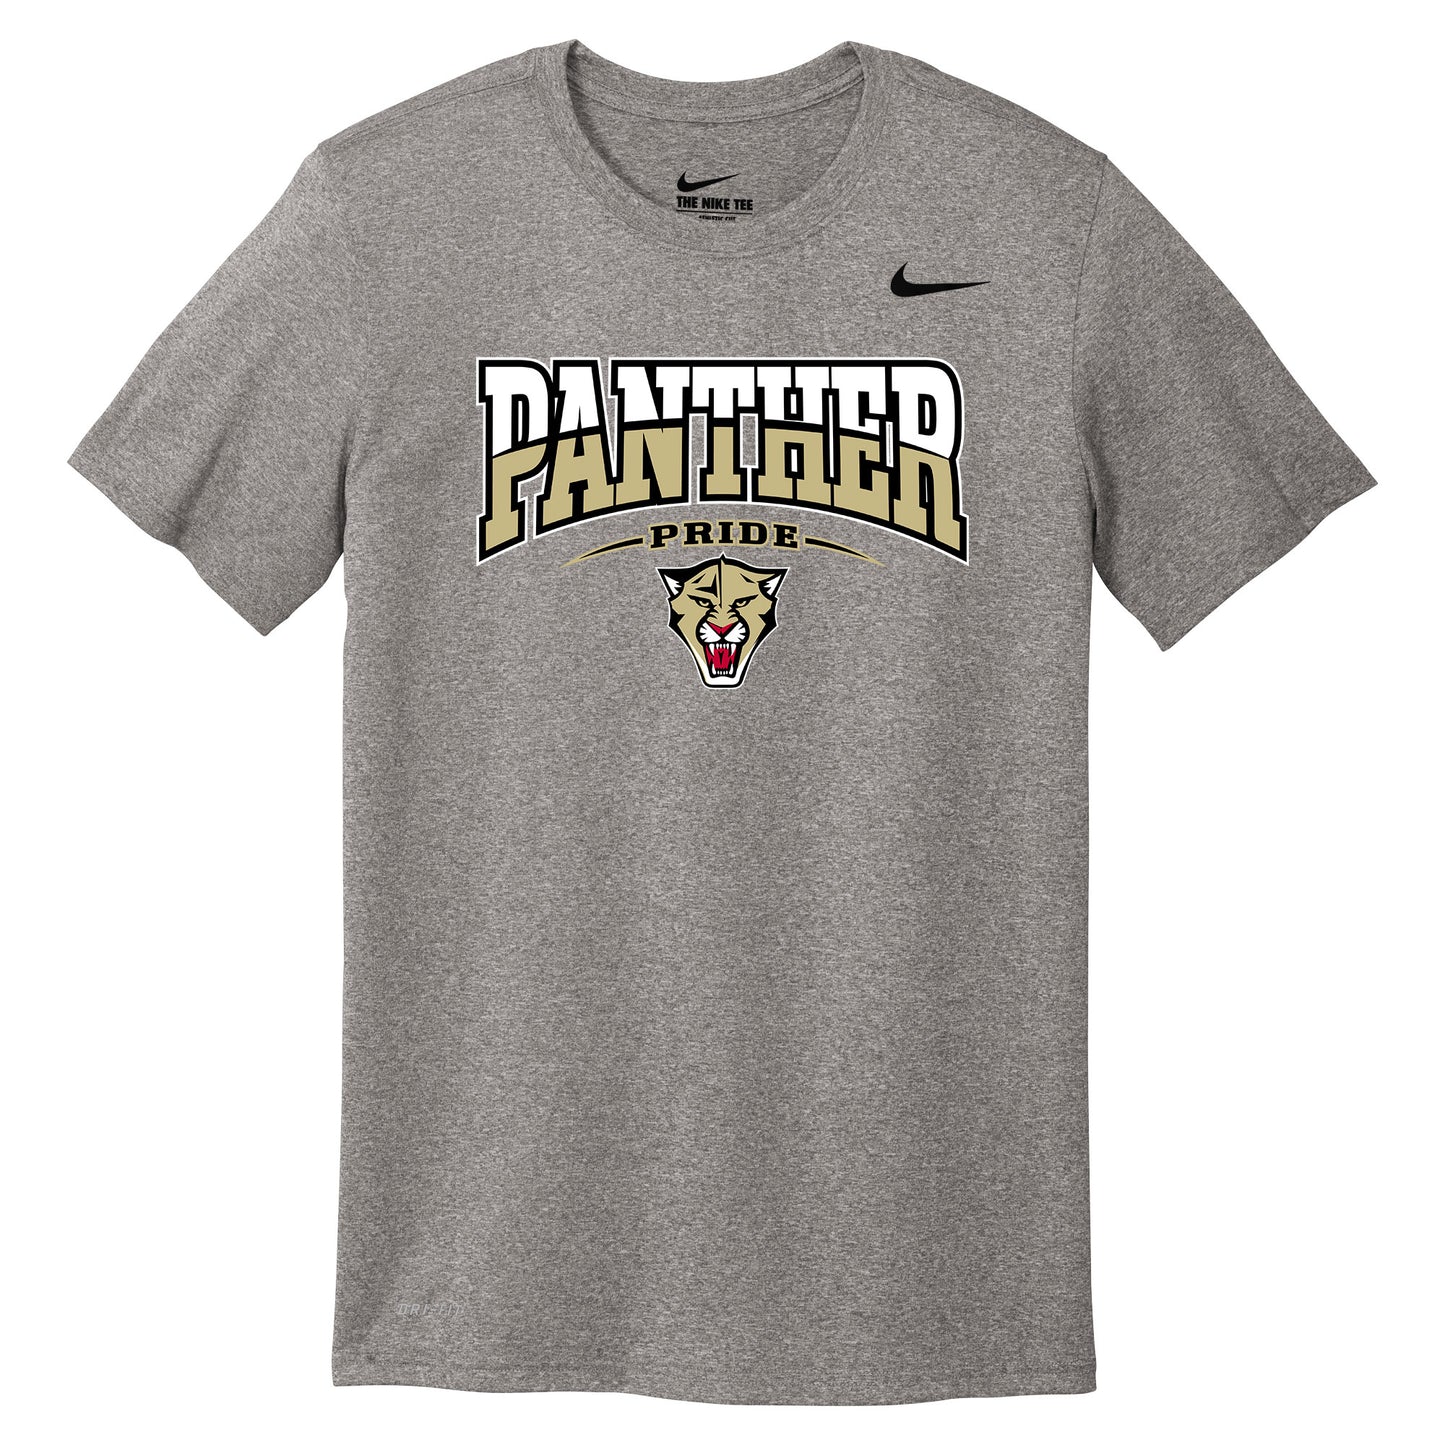 Plant High School Nike Legend Tee "Panthers Pride"